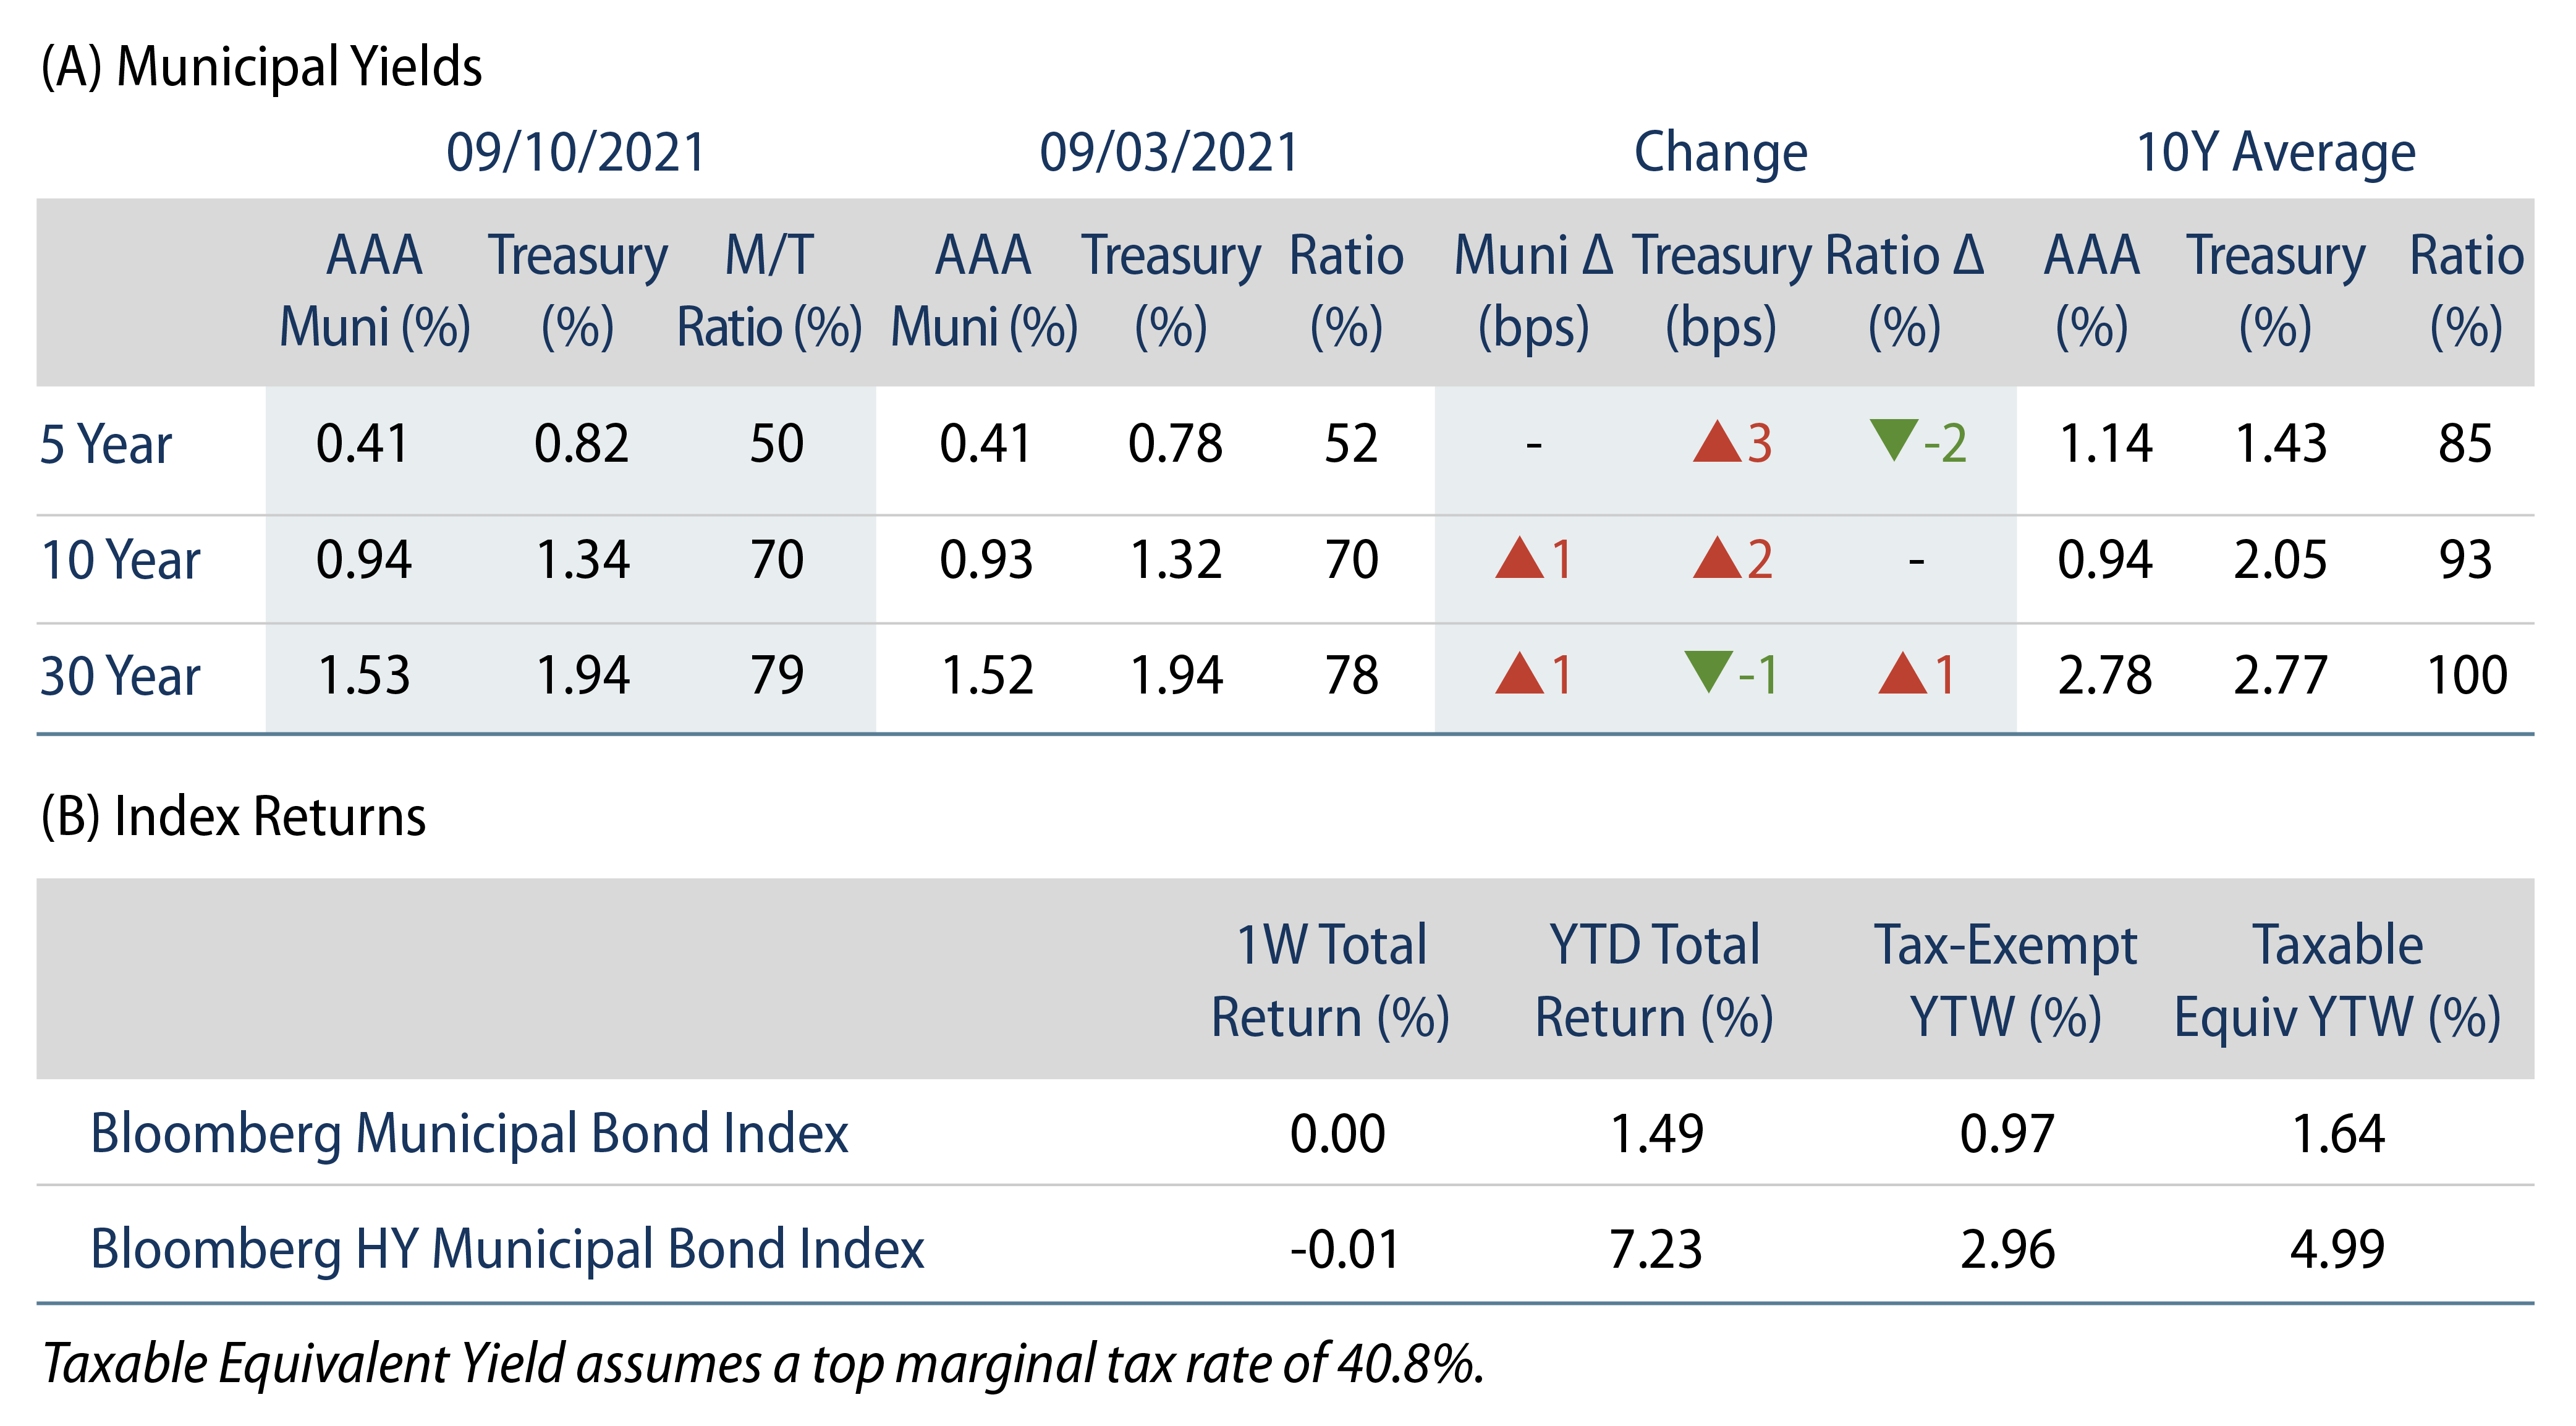 Municipal Bond Yields and Index Return